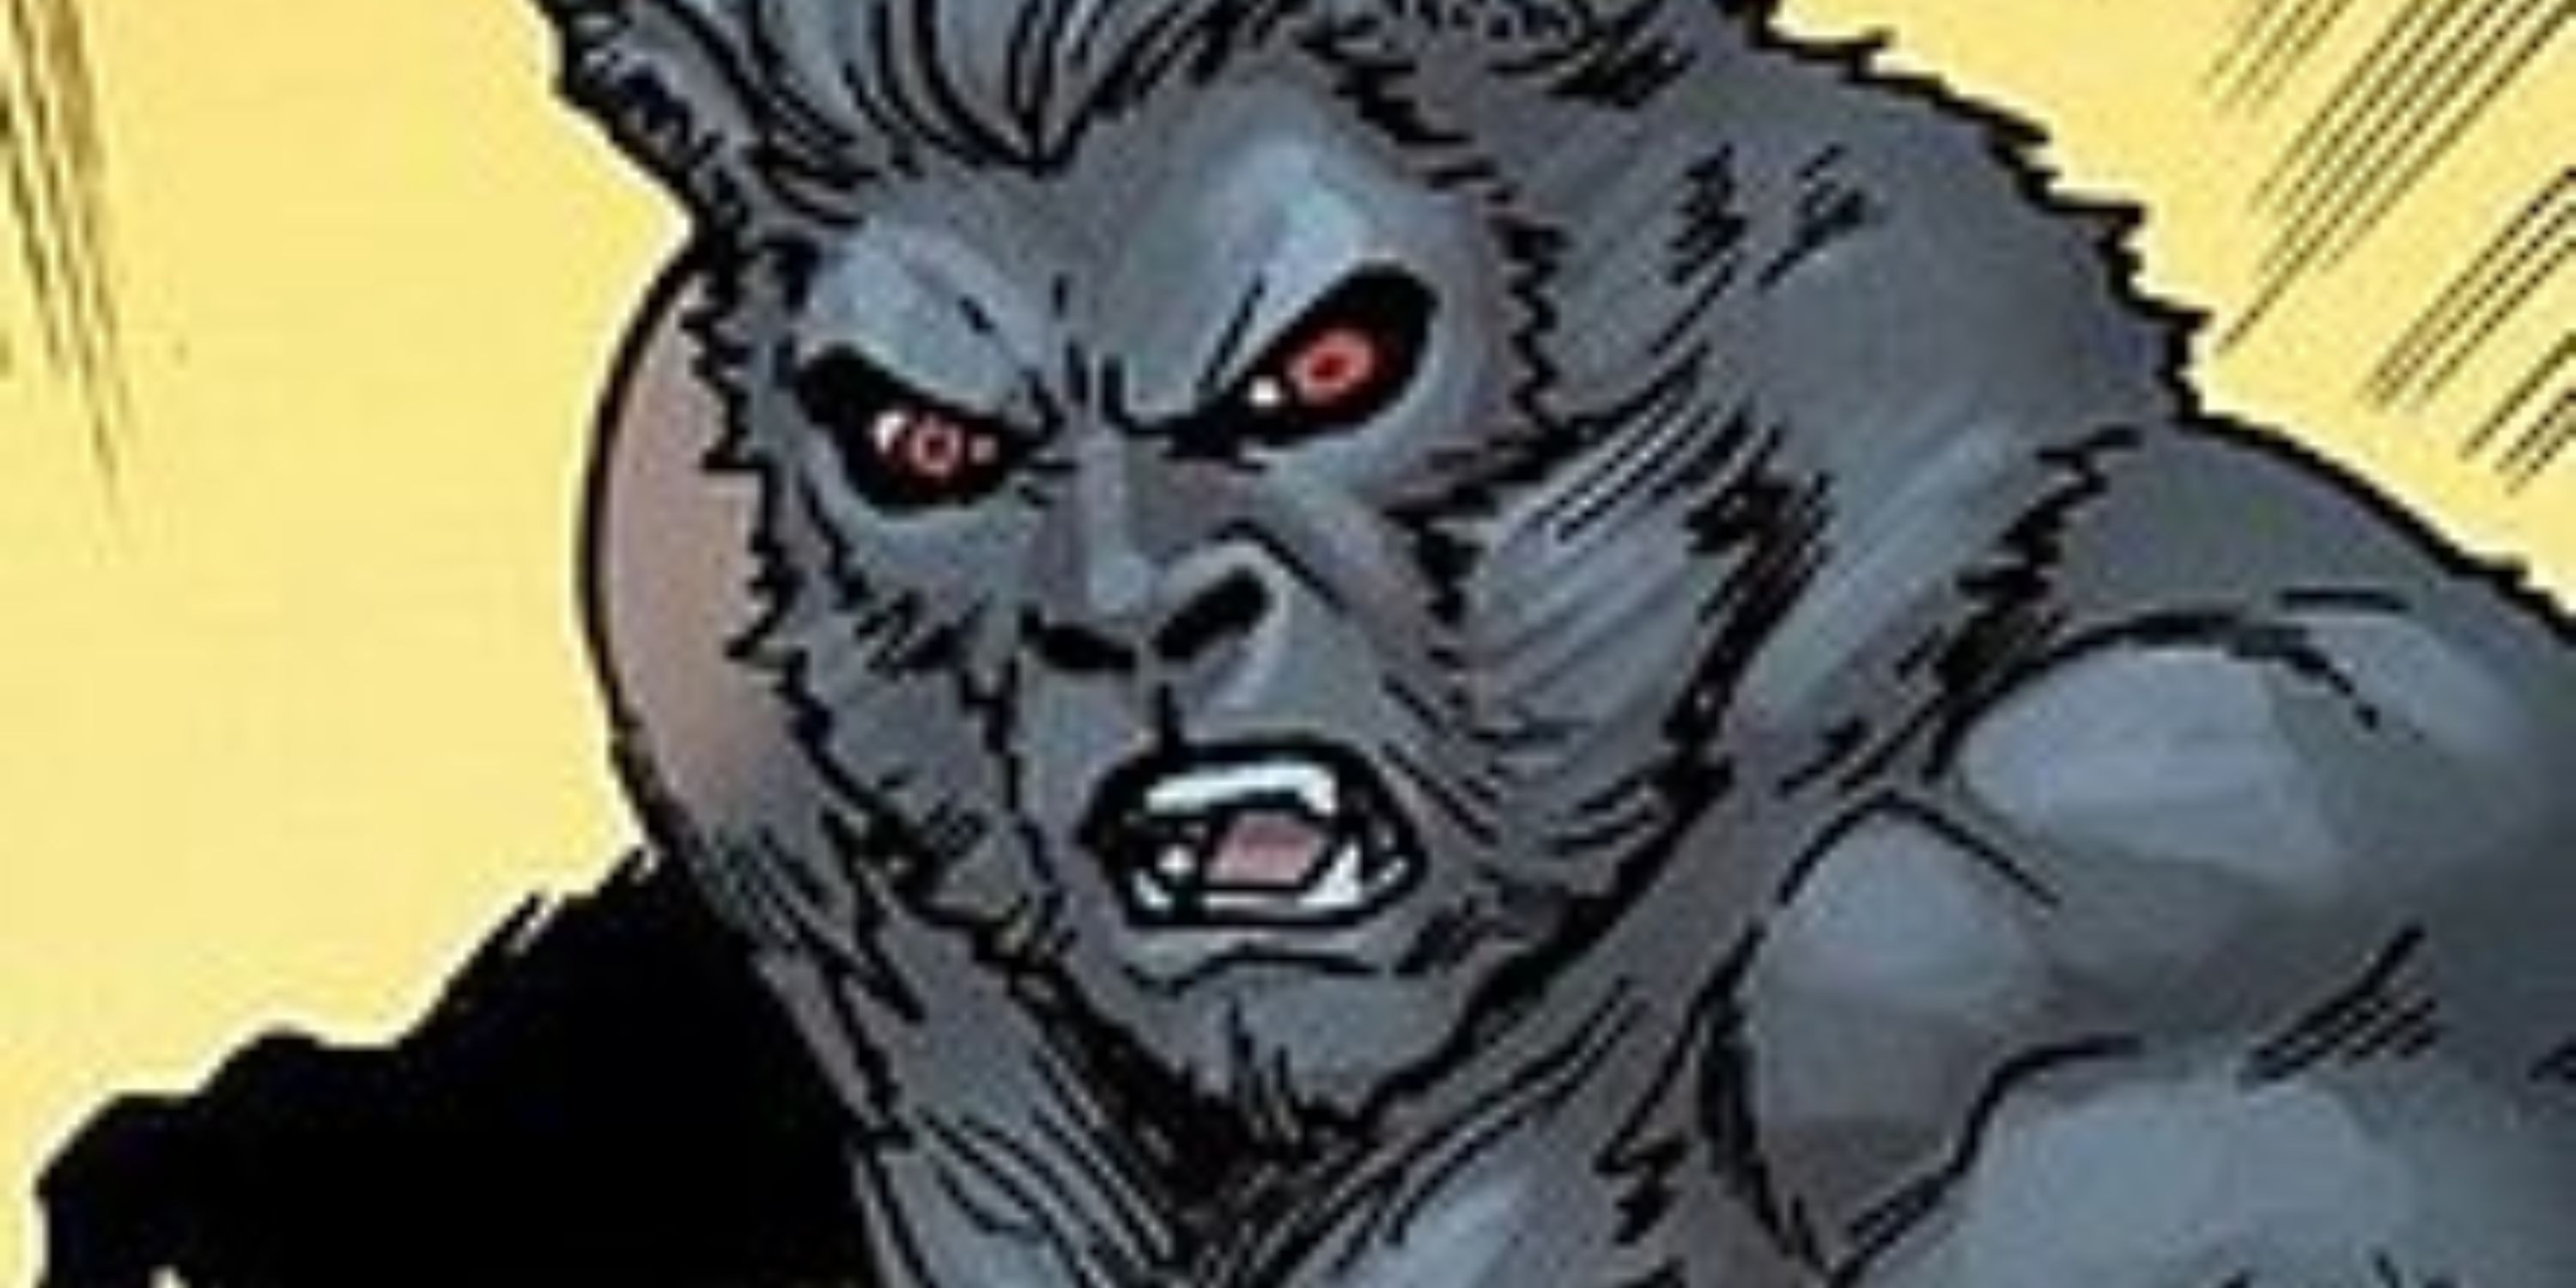 Hrimhari, the asgardian manwolf